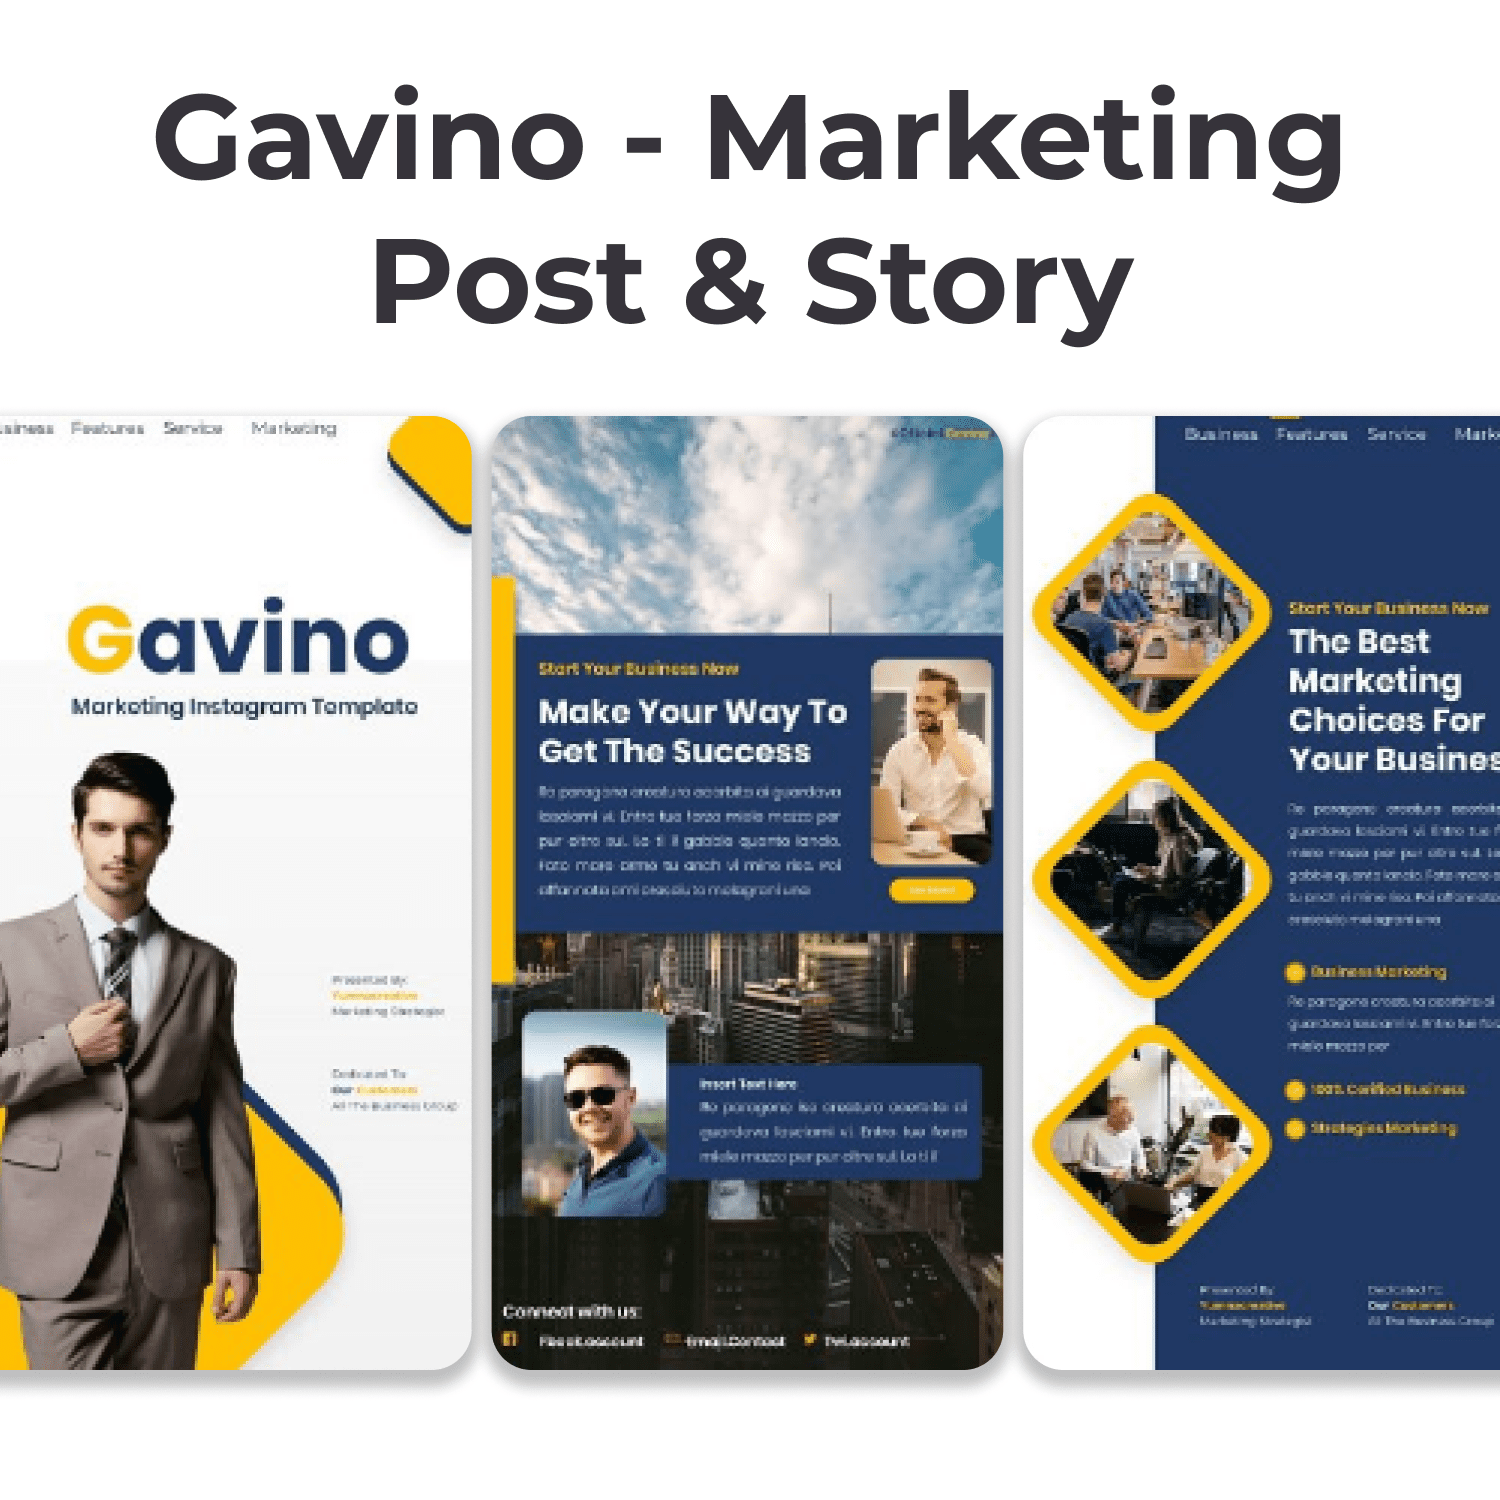 Gavino - Marketing Post & Story cover image.